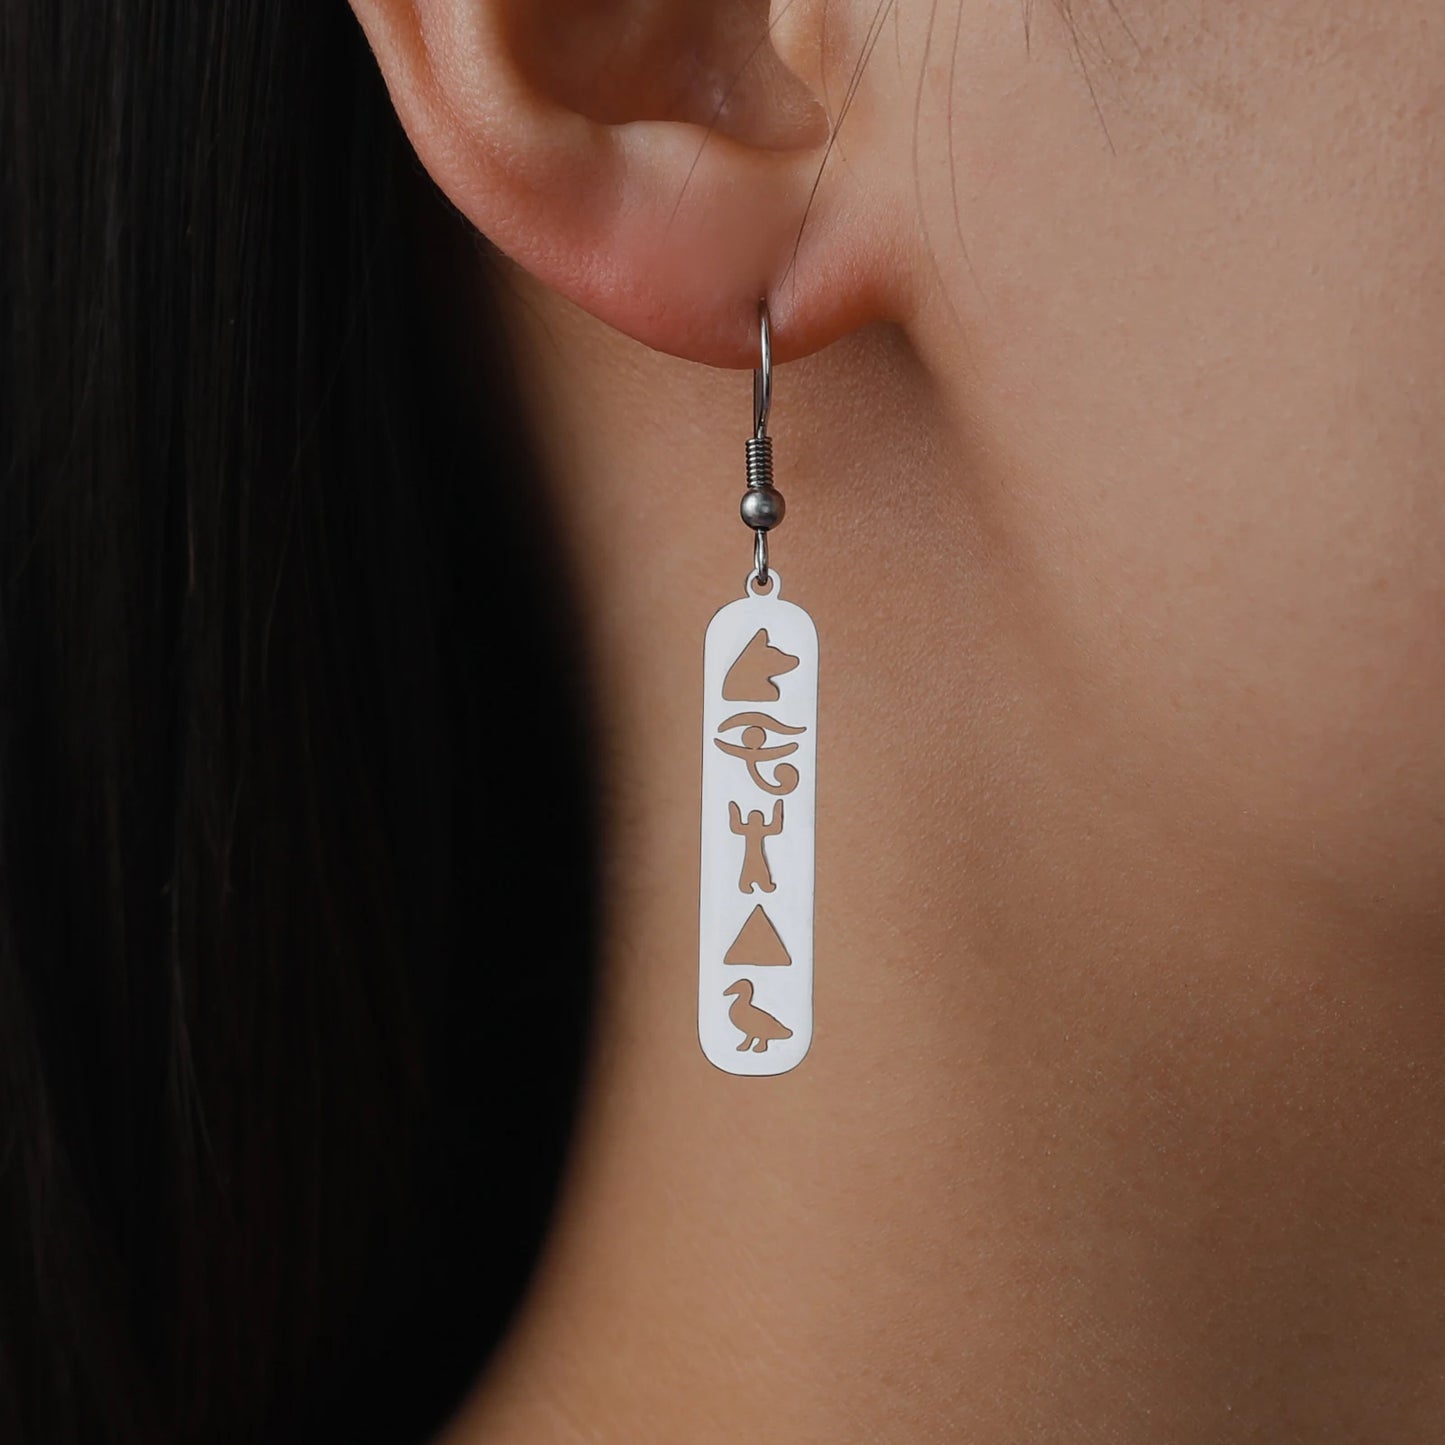 Ancient Egypt Earrings